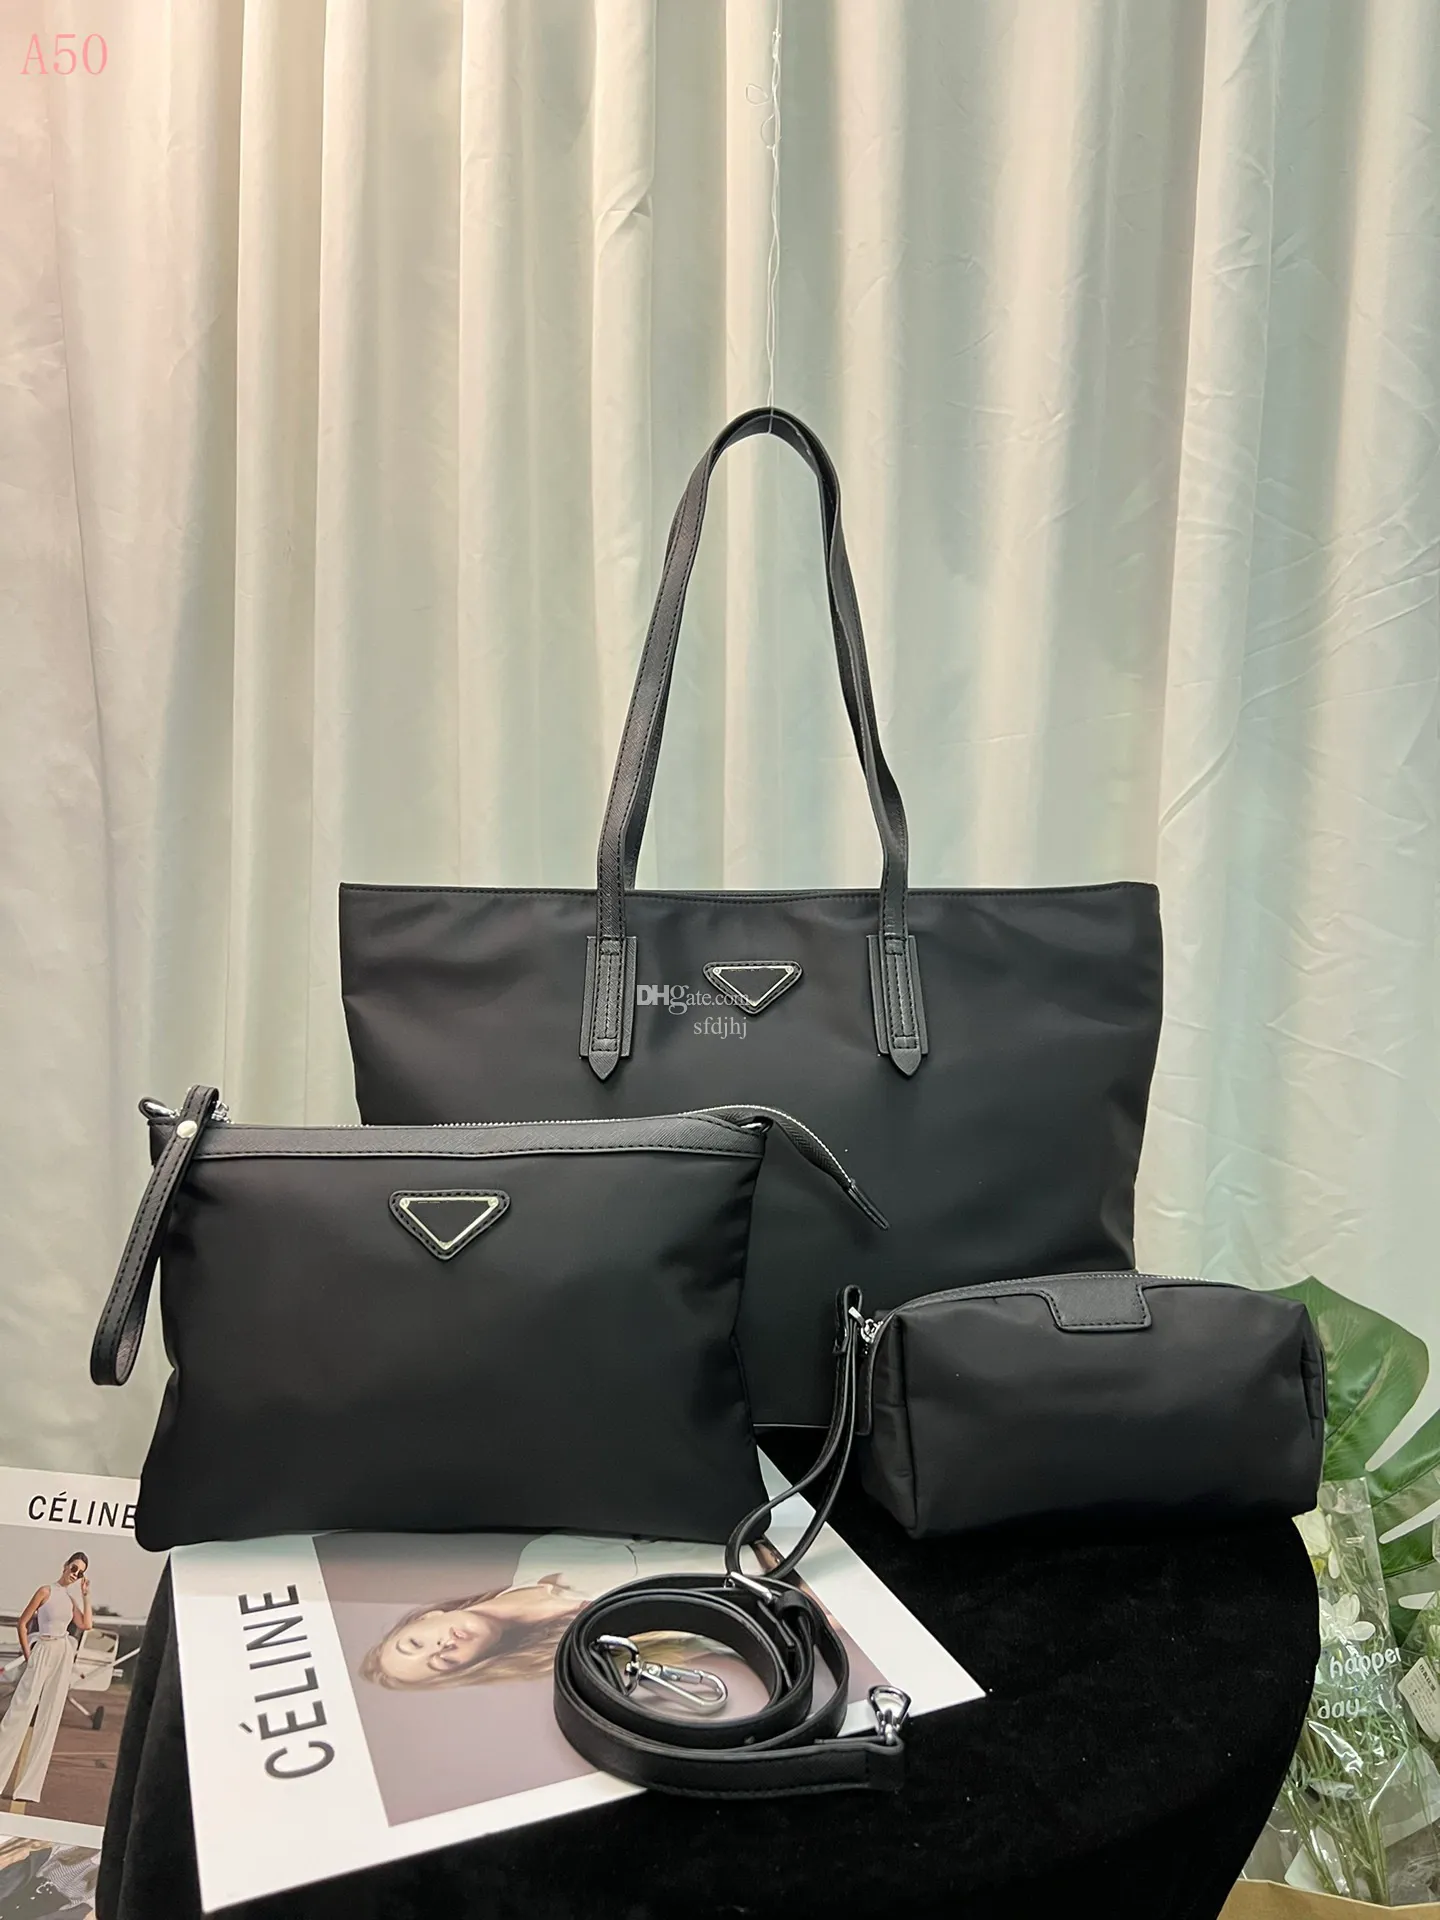 5A Quality New Classic Crossbody Bag Women Leather Handbag Tote Cross Body Bag Messenger black Shoulder Bag Handbags Purses sfdjhj Gift Wallet 3pcs 35 ,38 cm